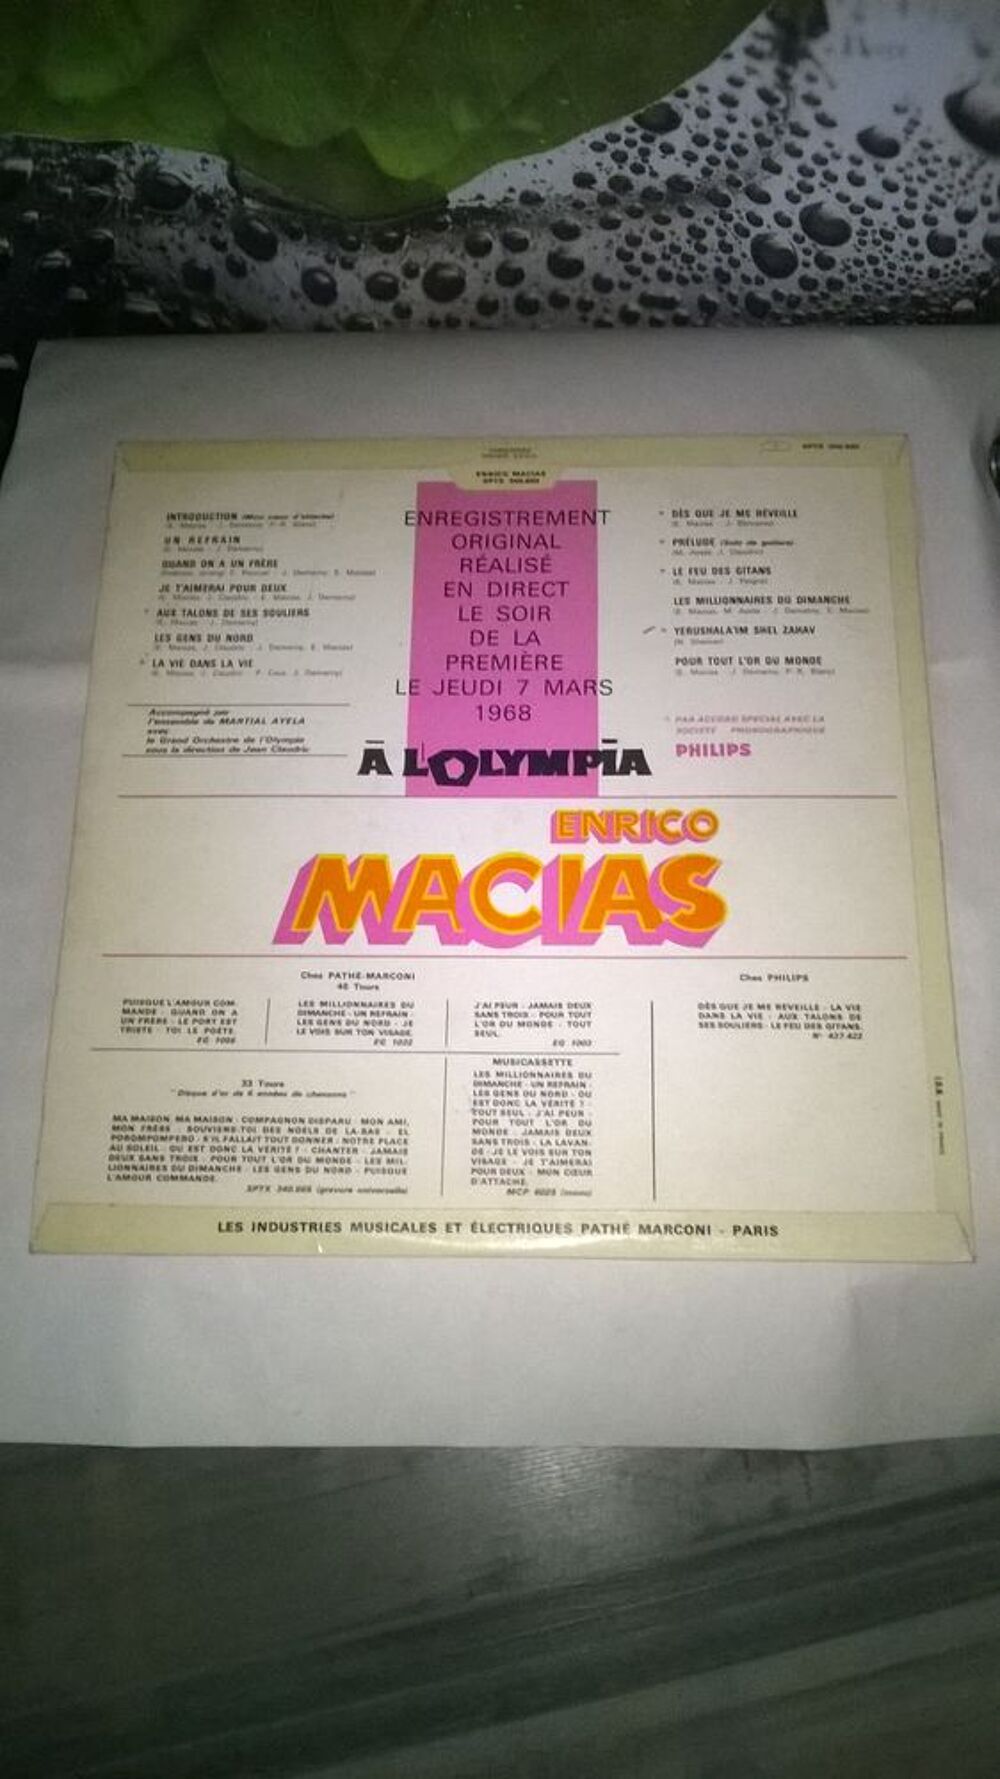 Vinyle Enrico Macias 
Olympia 68
1968
Excellent etat
Int CD et vinyles